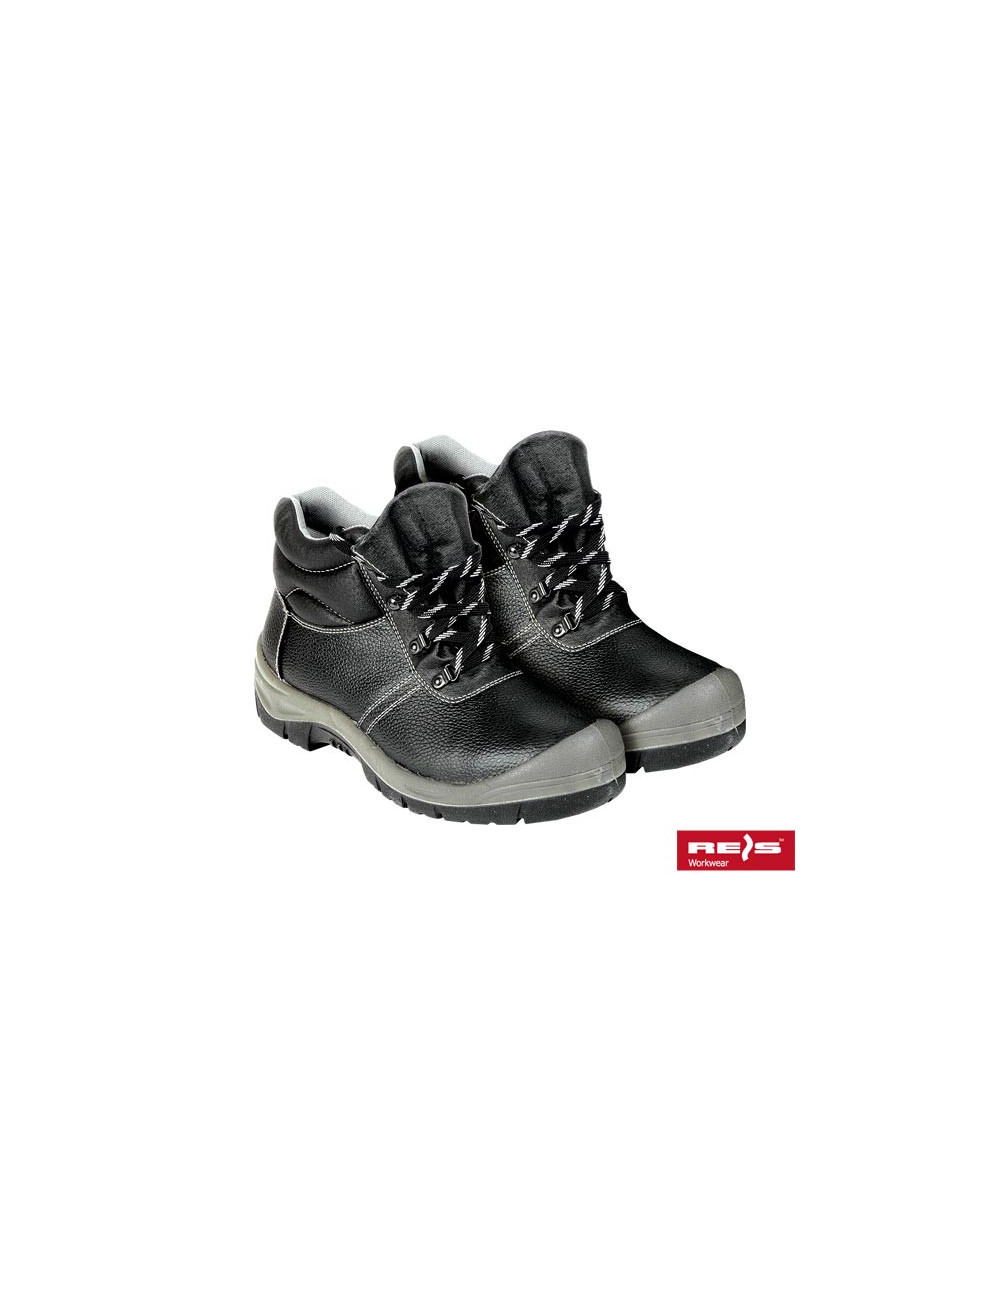 Occupational boots brbruk bs black-grey Reis